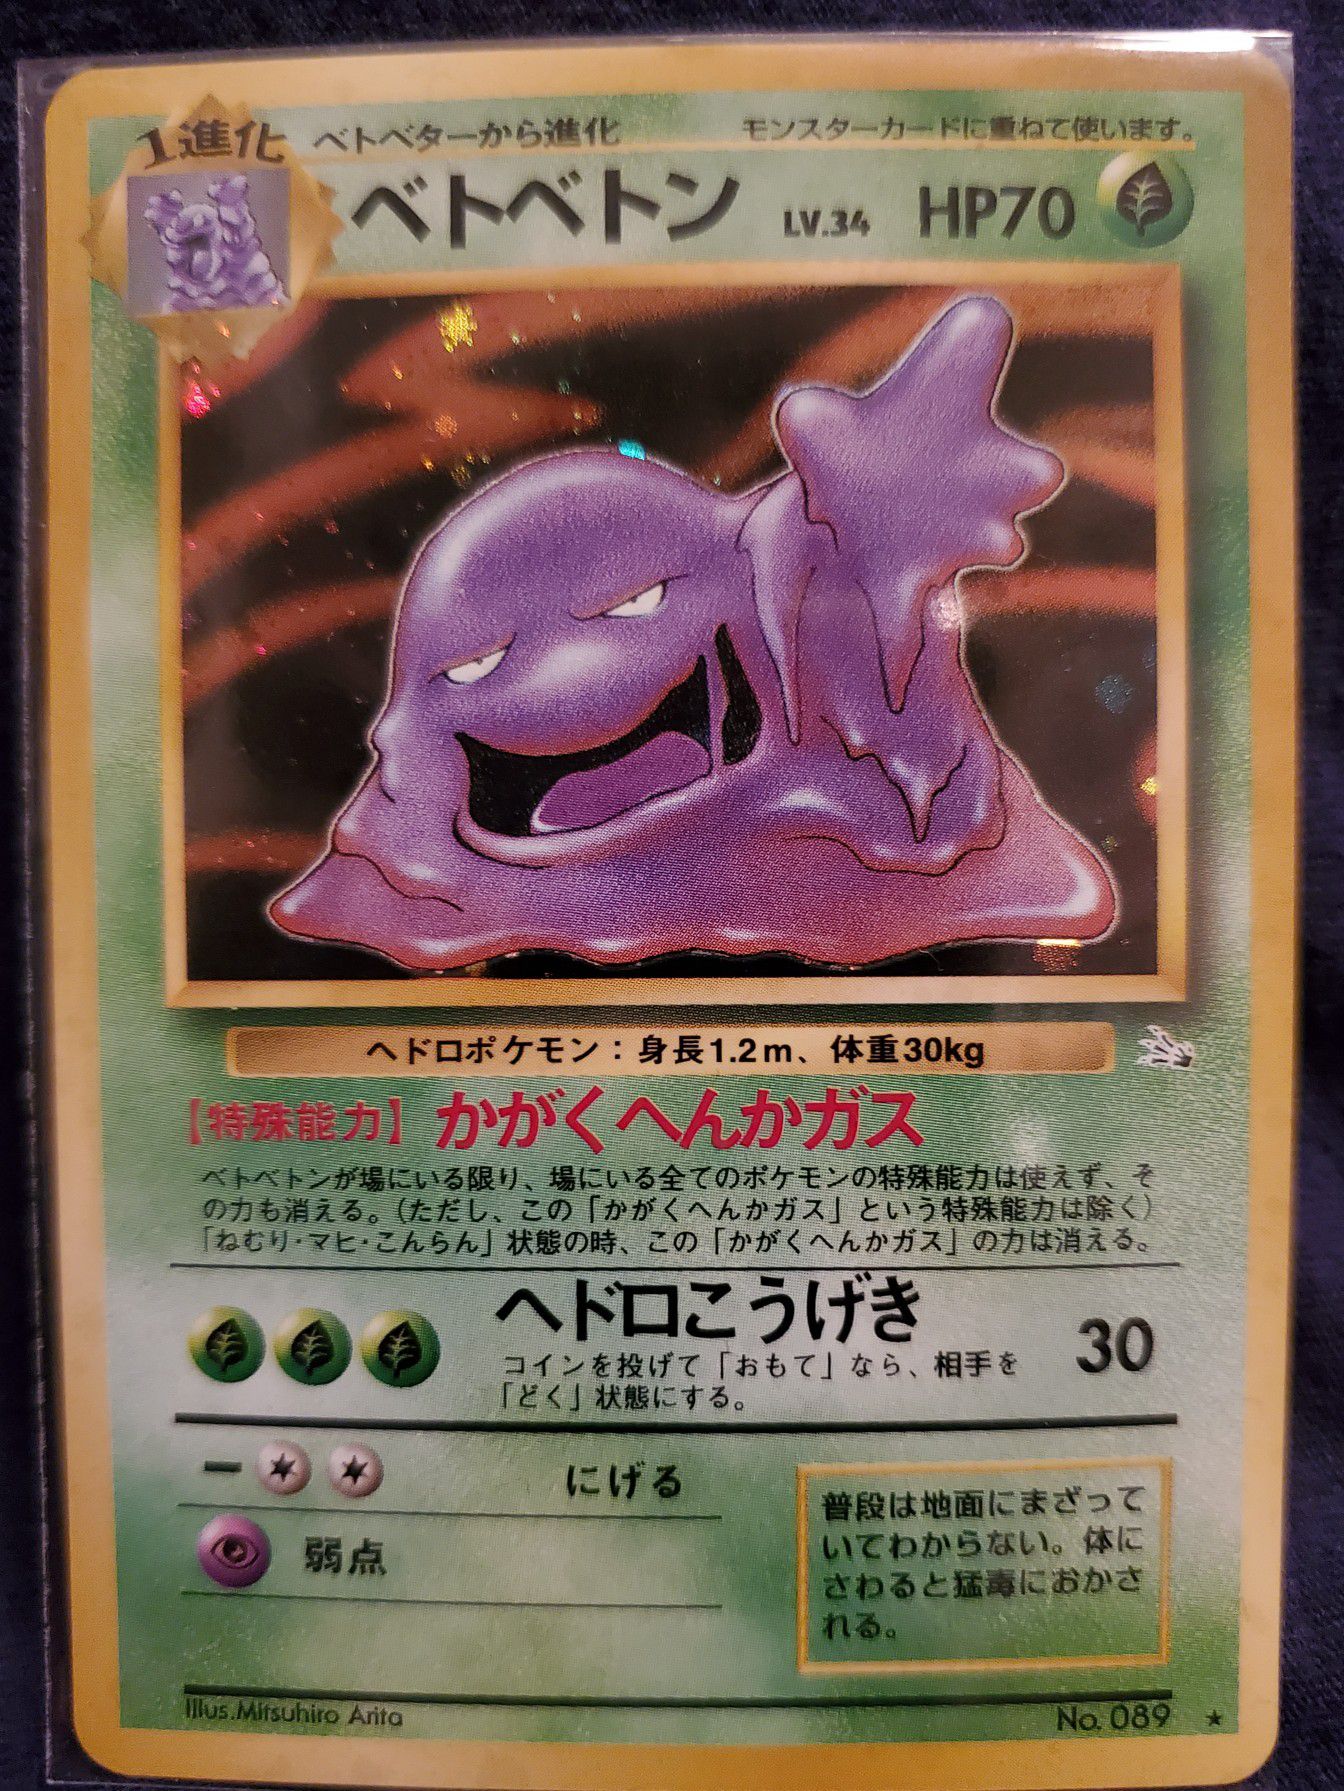 MUK HOLO (JAPANESE) Pokemon Card – No. 089 - NM